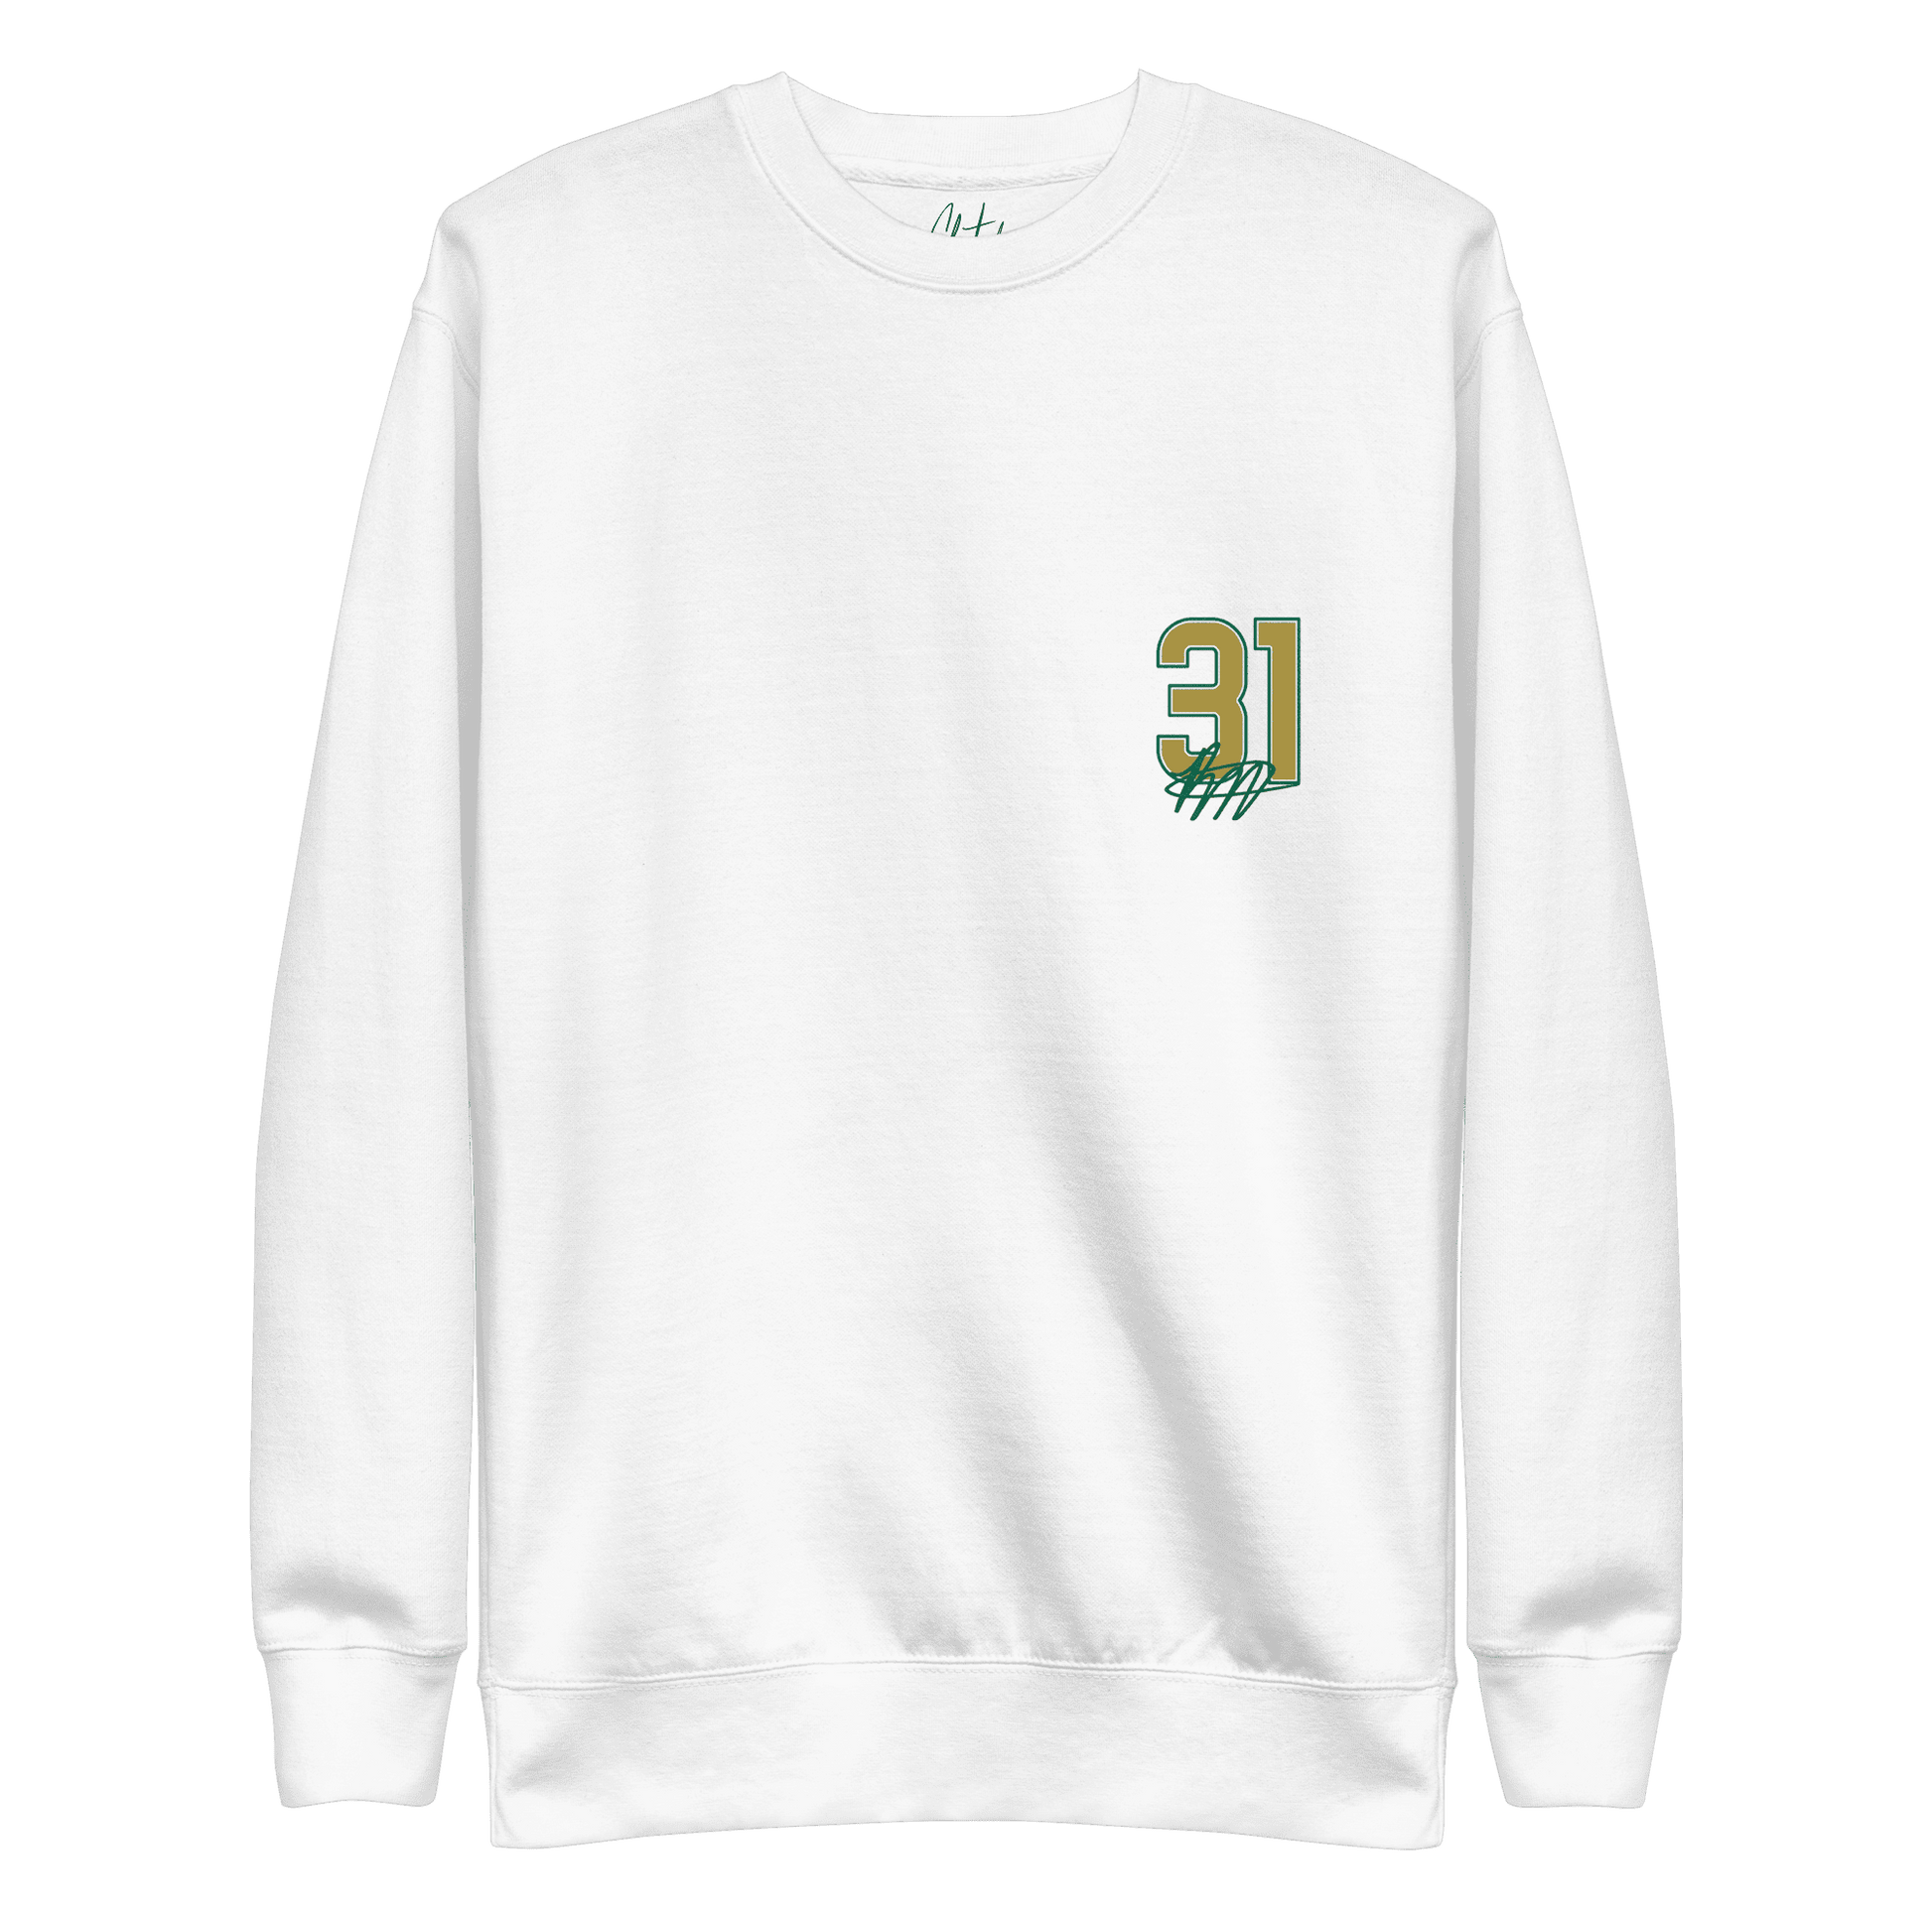 Ralph Montero | Mural Crewneck Sweatshirt - Clutch - Clothing